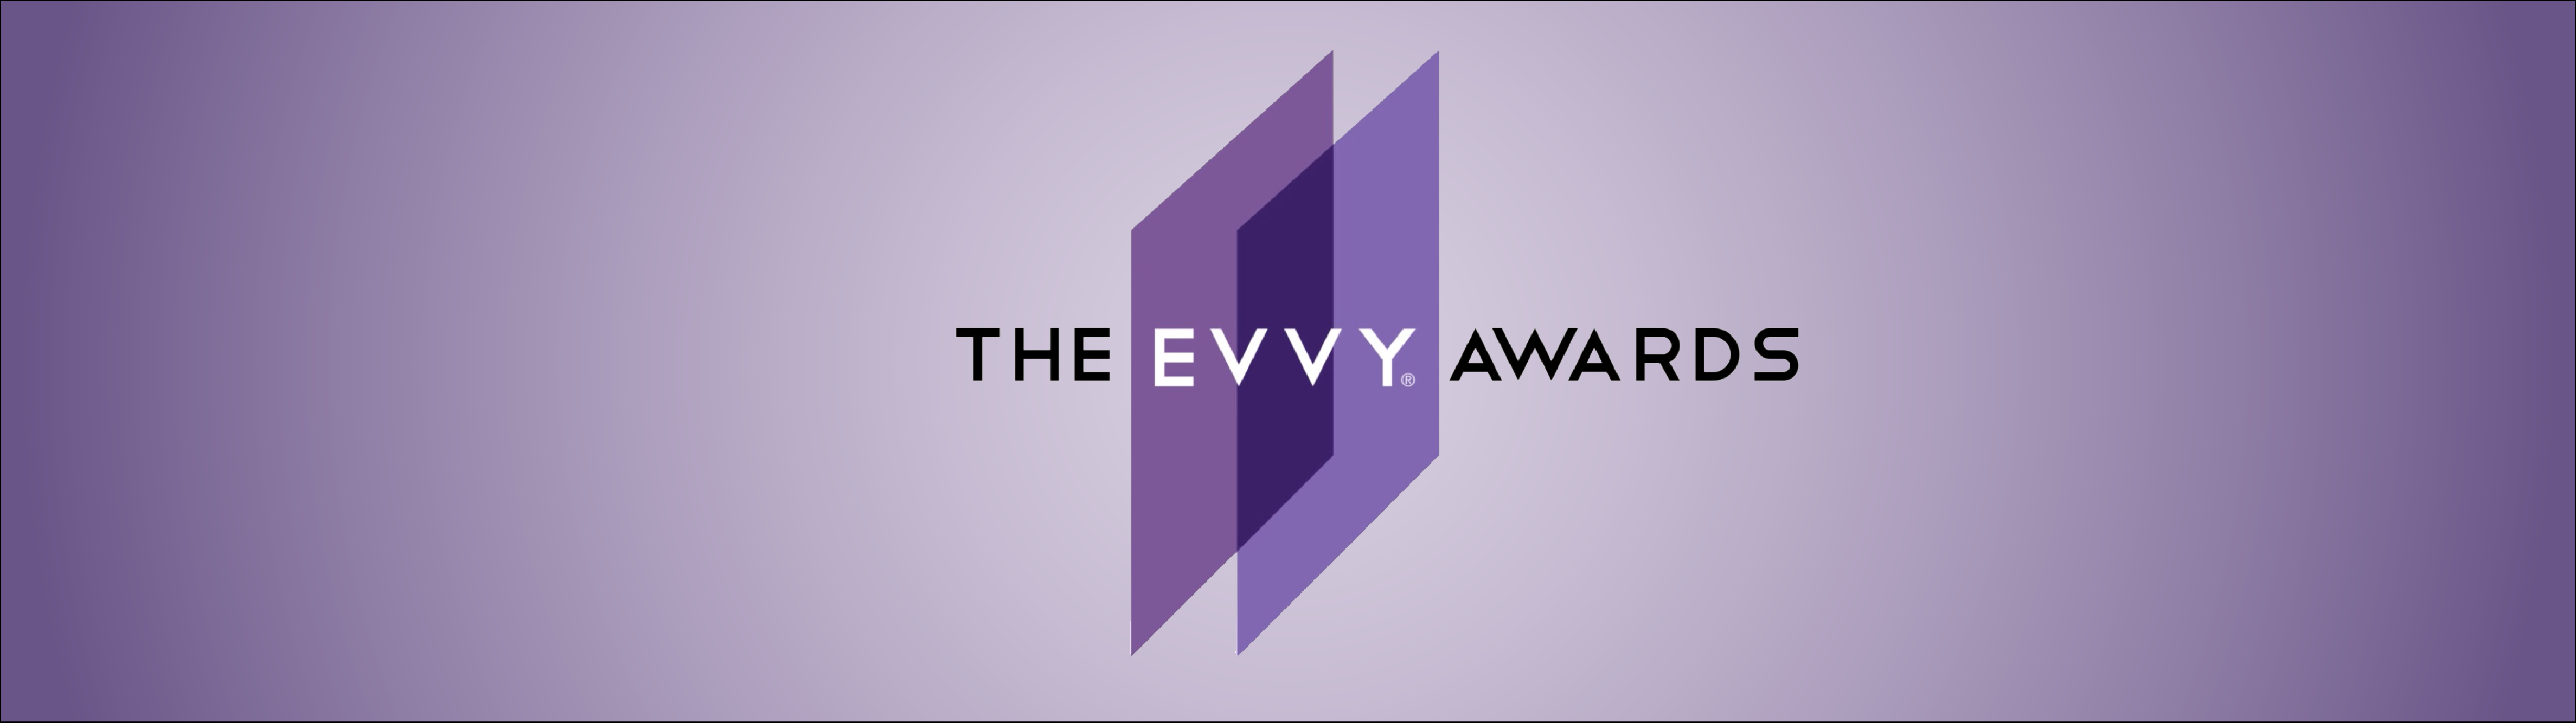 EVVY Awards logo